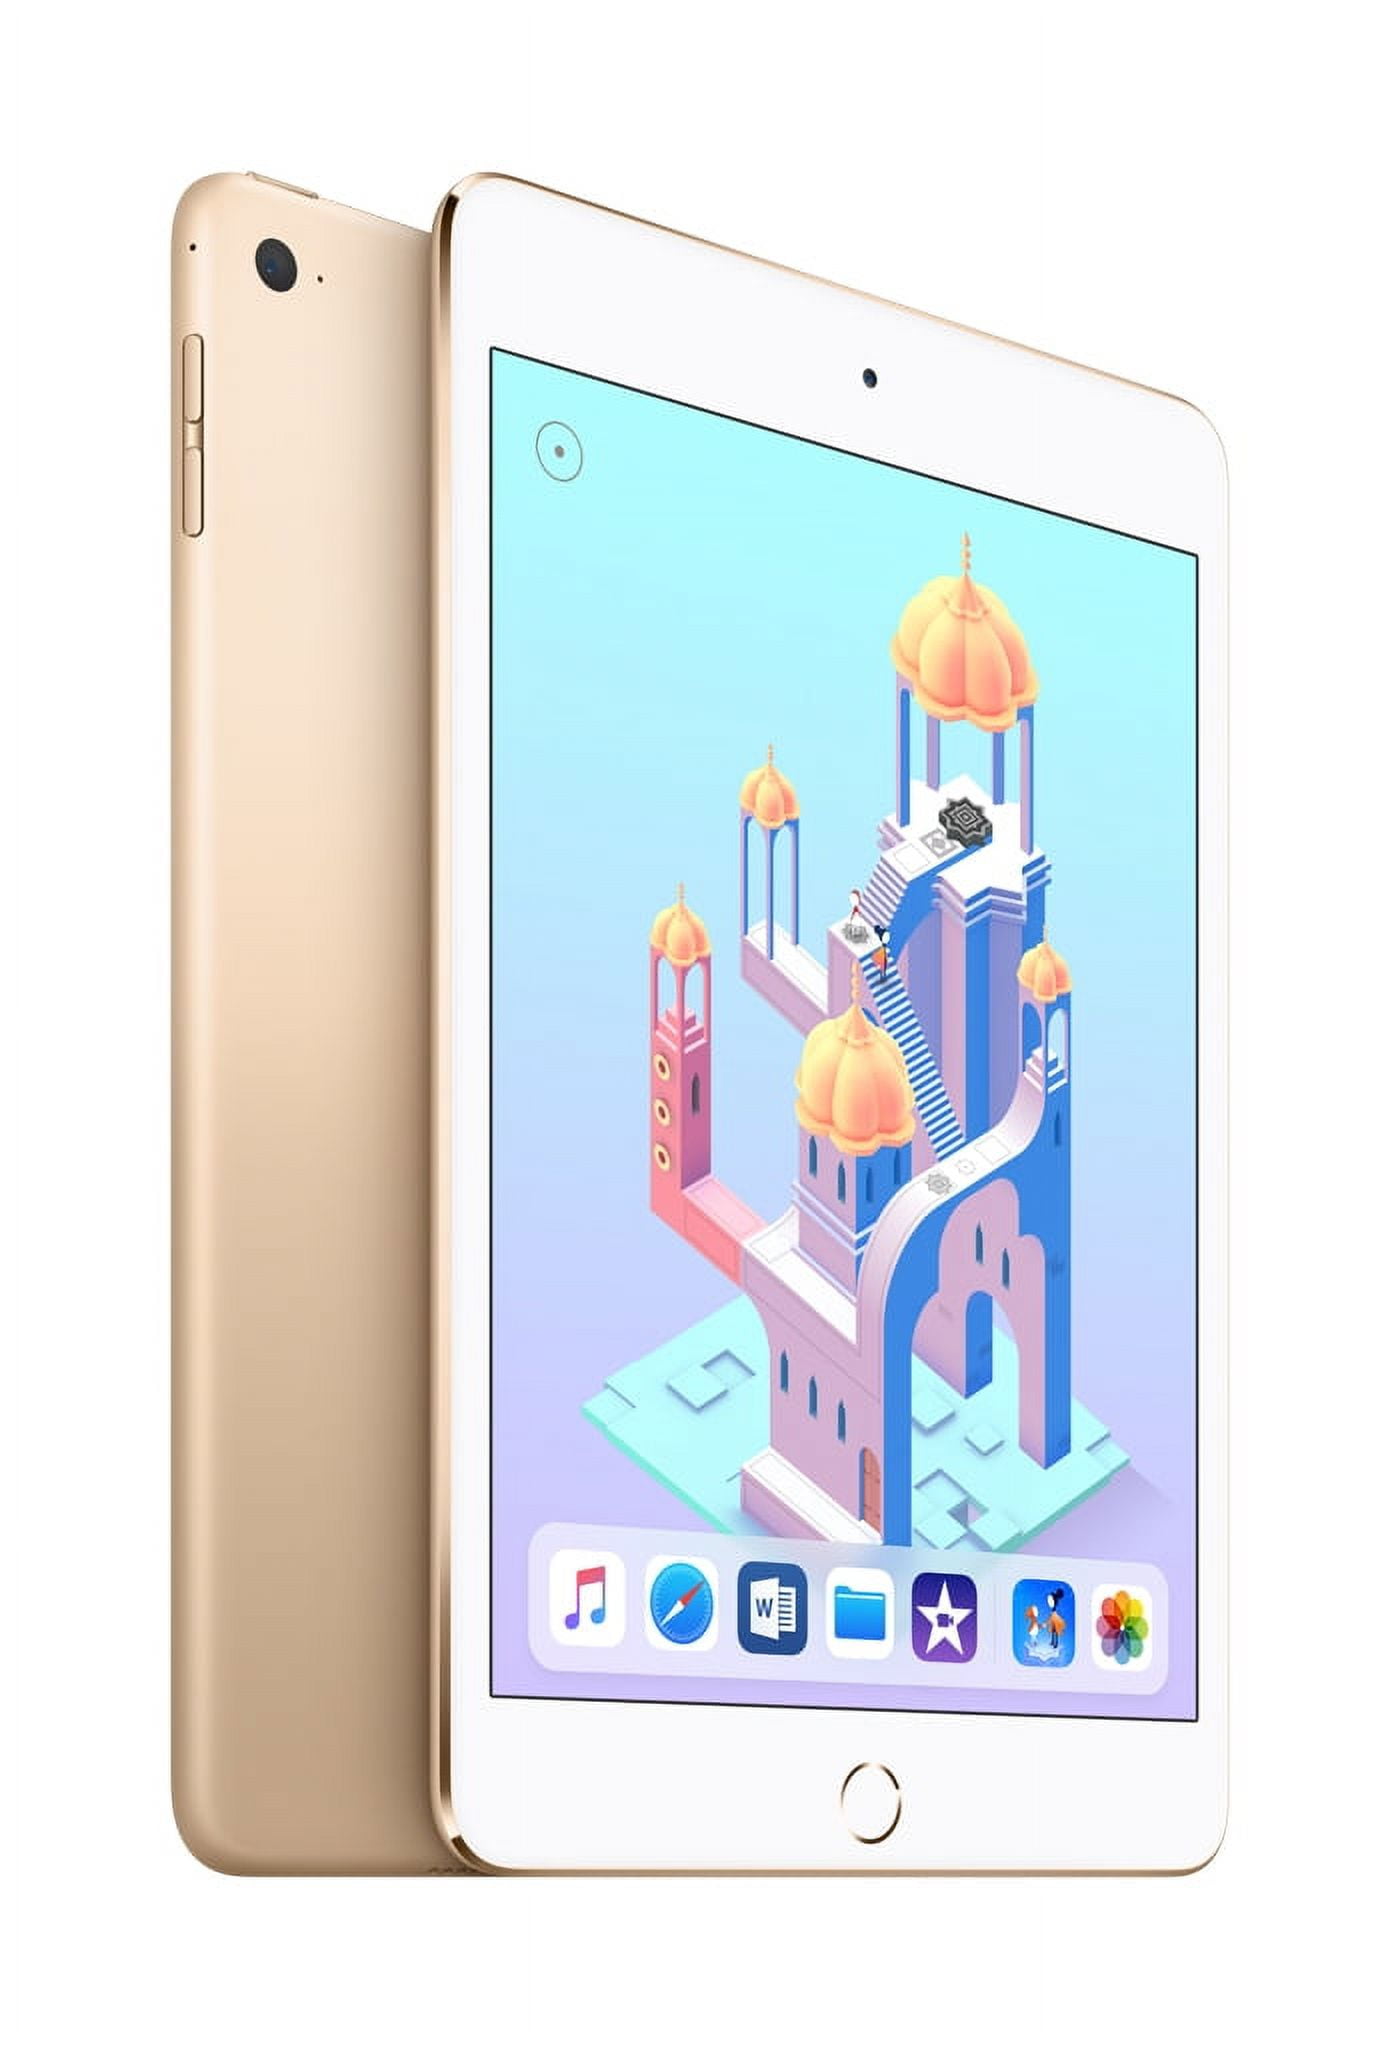 Apple iPad Air 2 Wi-Fi + Cellular 16GB Gold